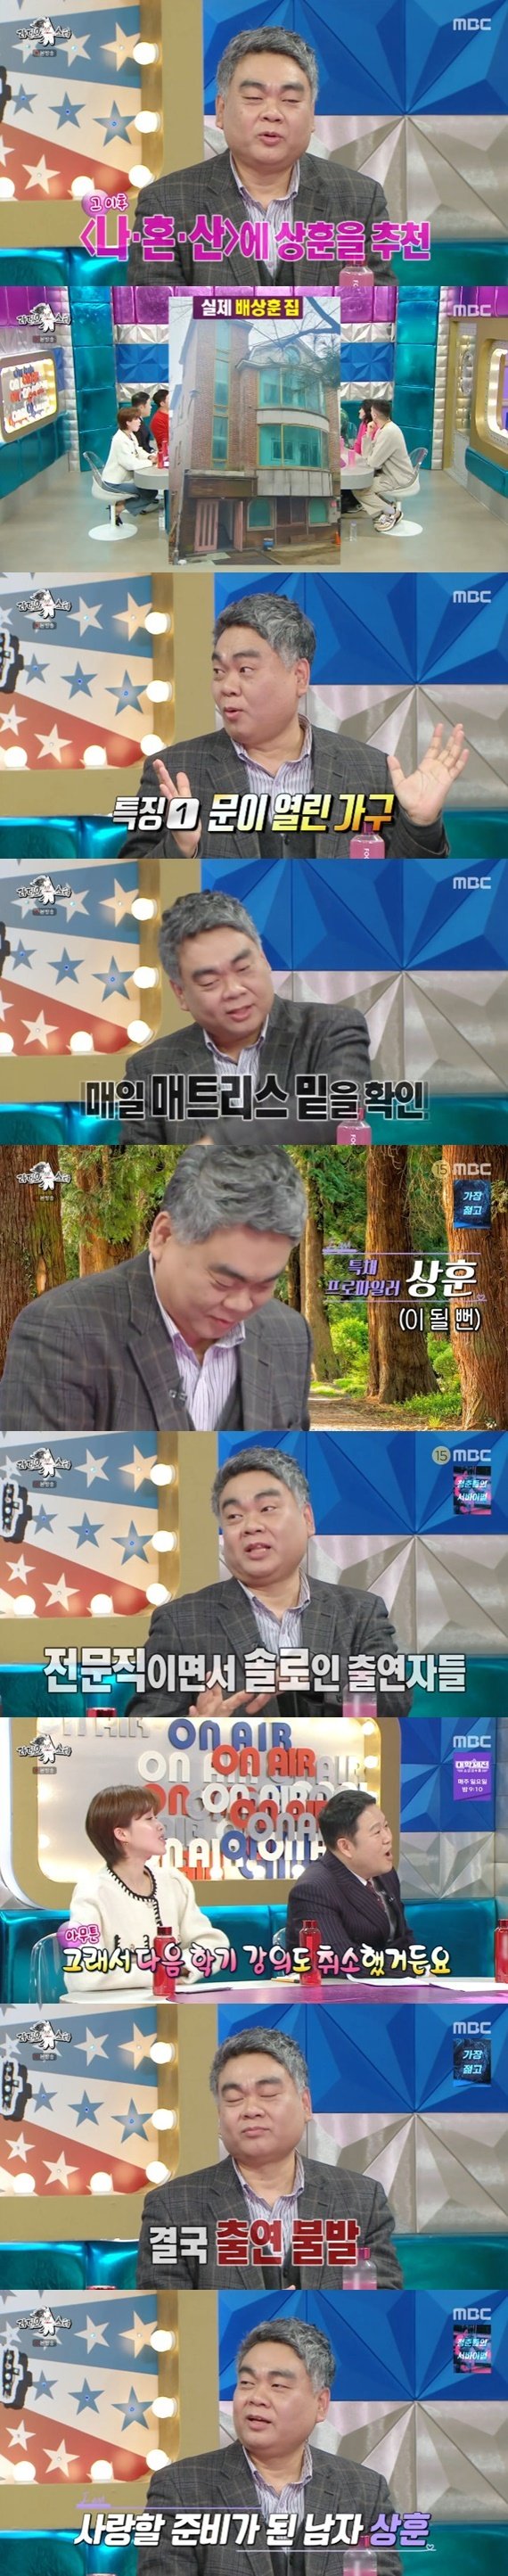 MBC '라디오스타' 캡처